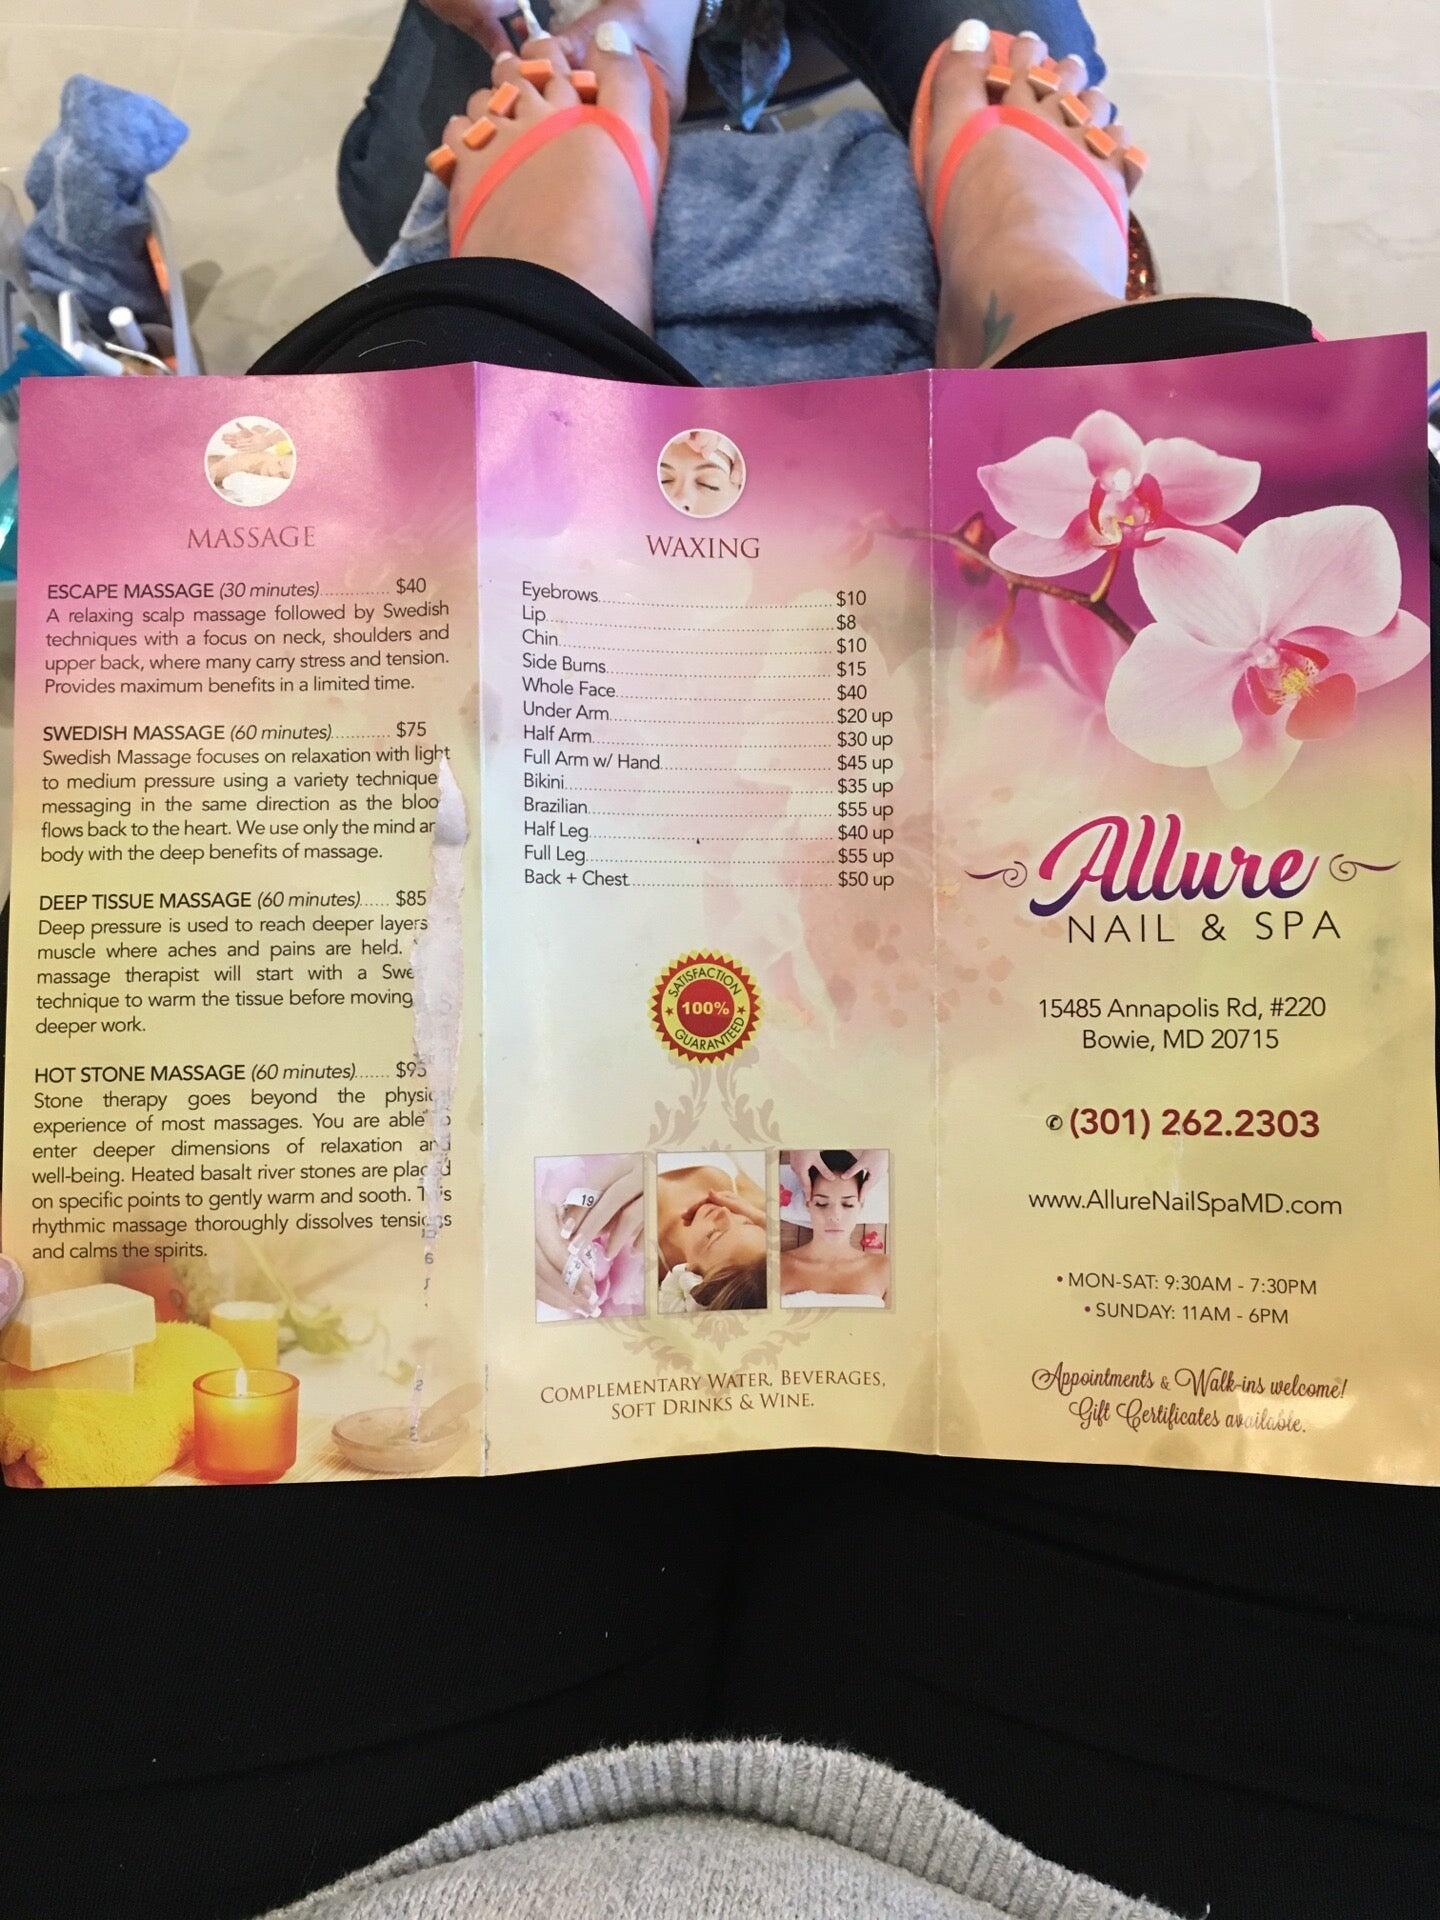 Allure Nails & Spa - Nail Salon in Indian Head-Leigh Tallahassee FL 32301